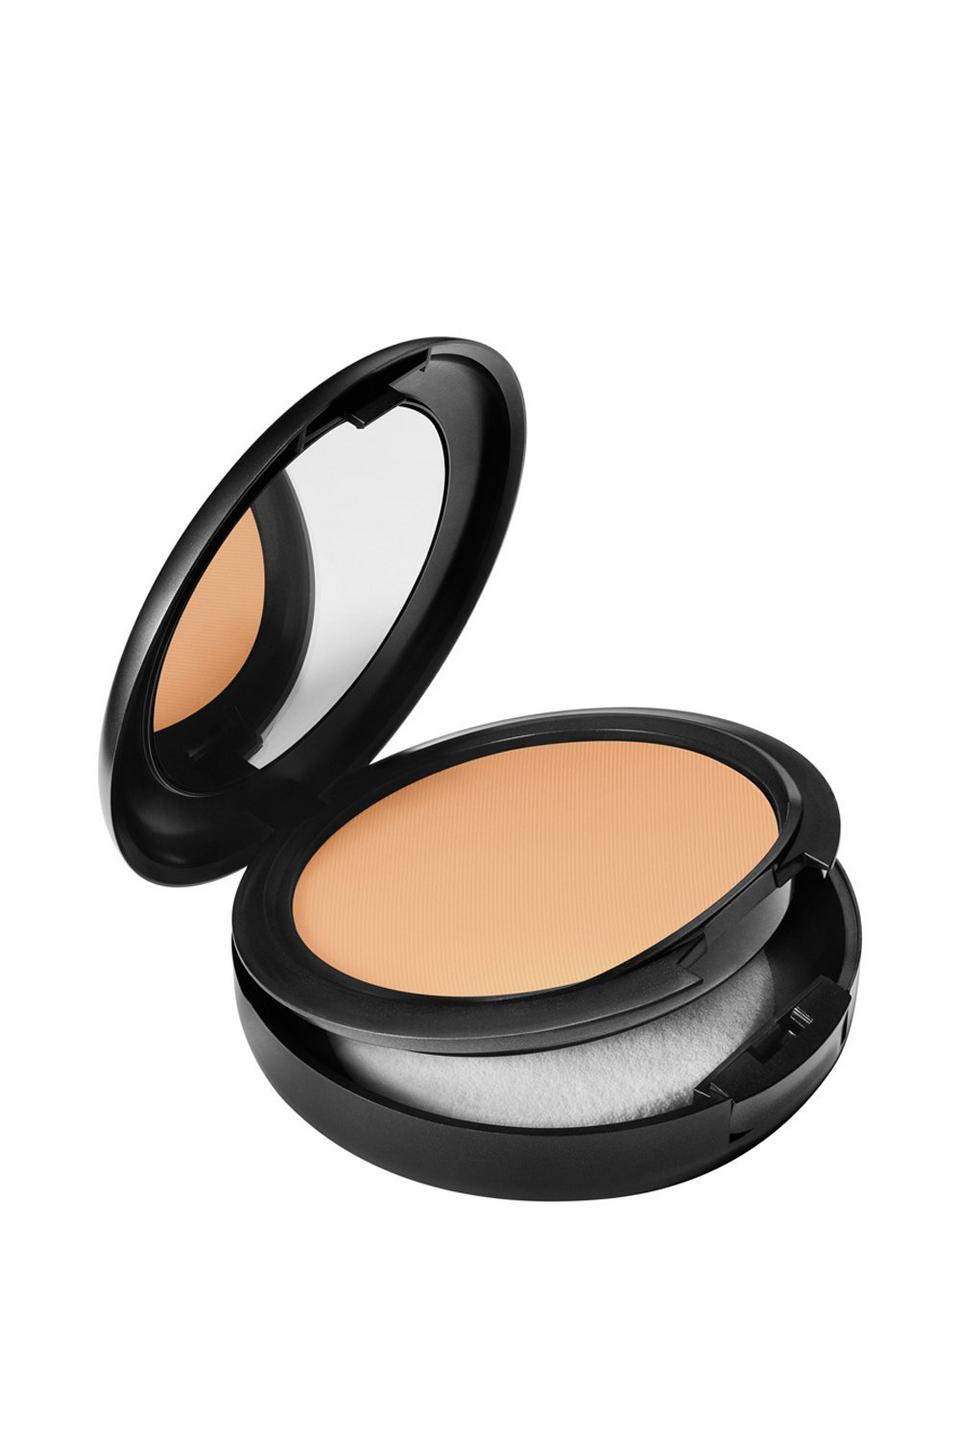 mac cosmetics studio fix powder plus foundation ingredients